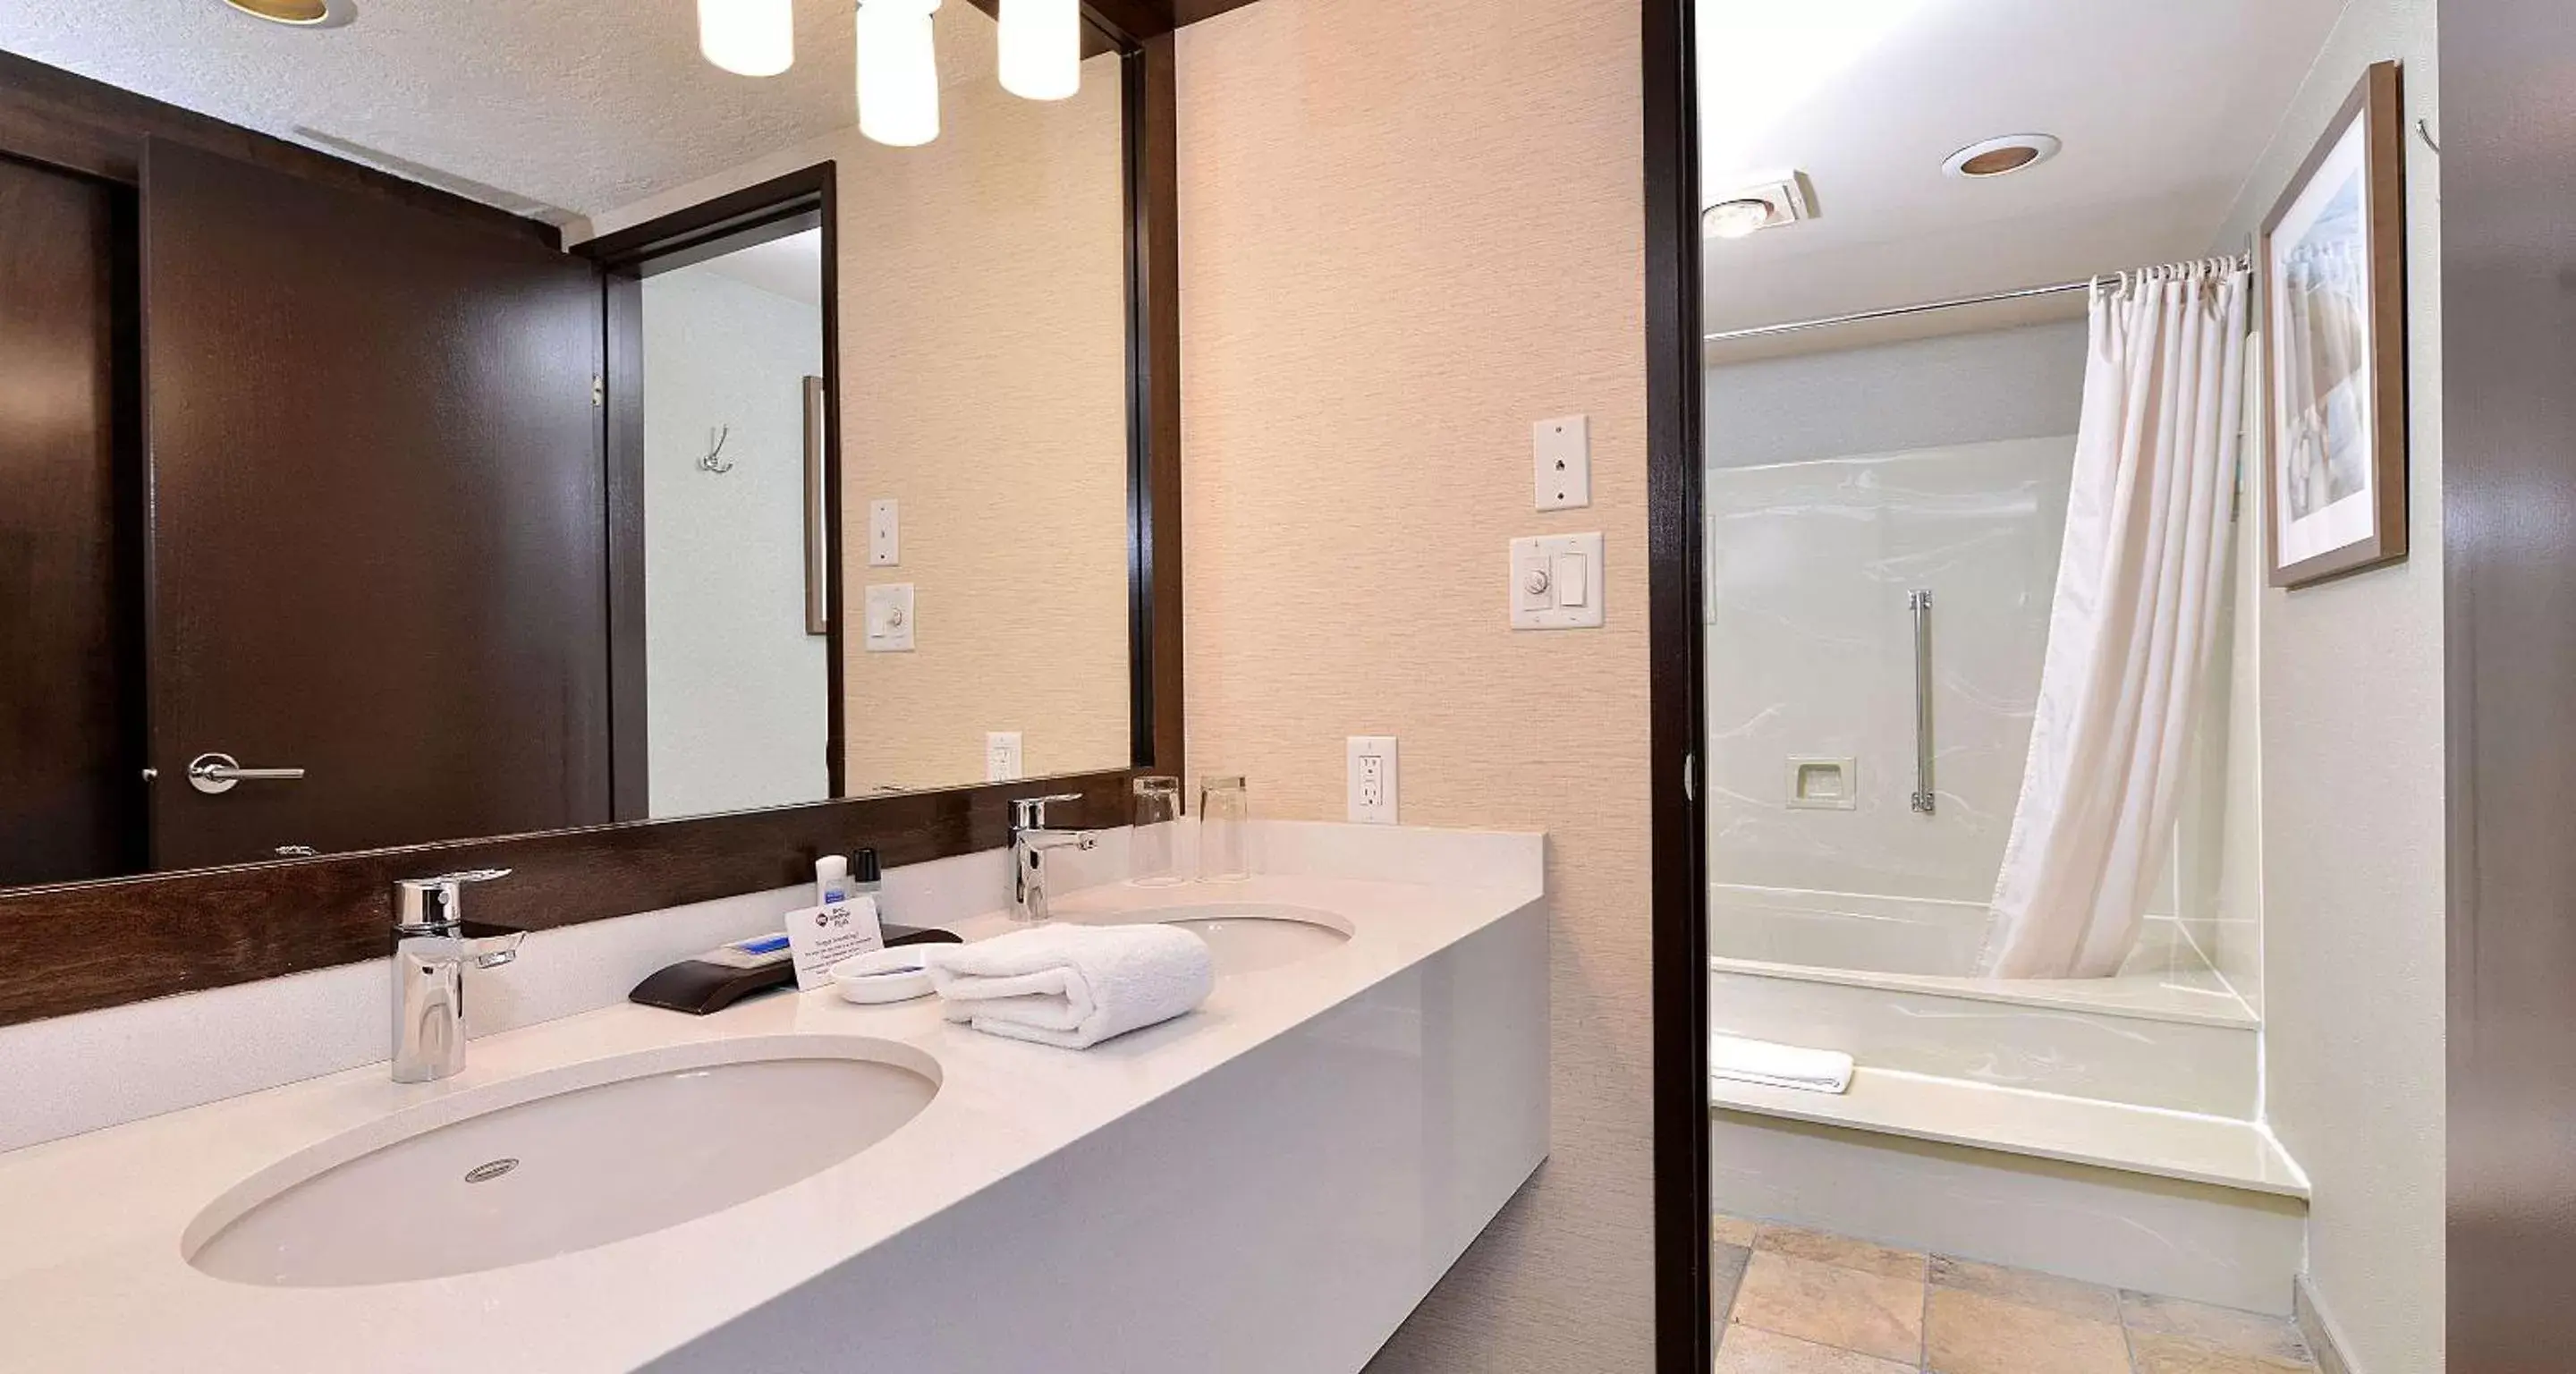 Photo of the whole room, Bathroom in Best Western Plus Emerald Isle Hotel